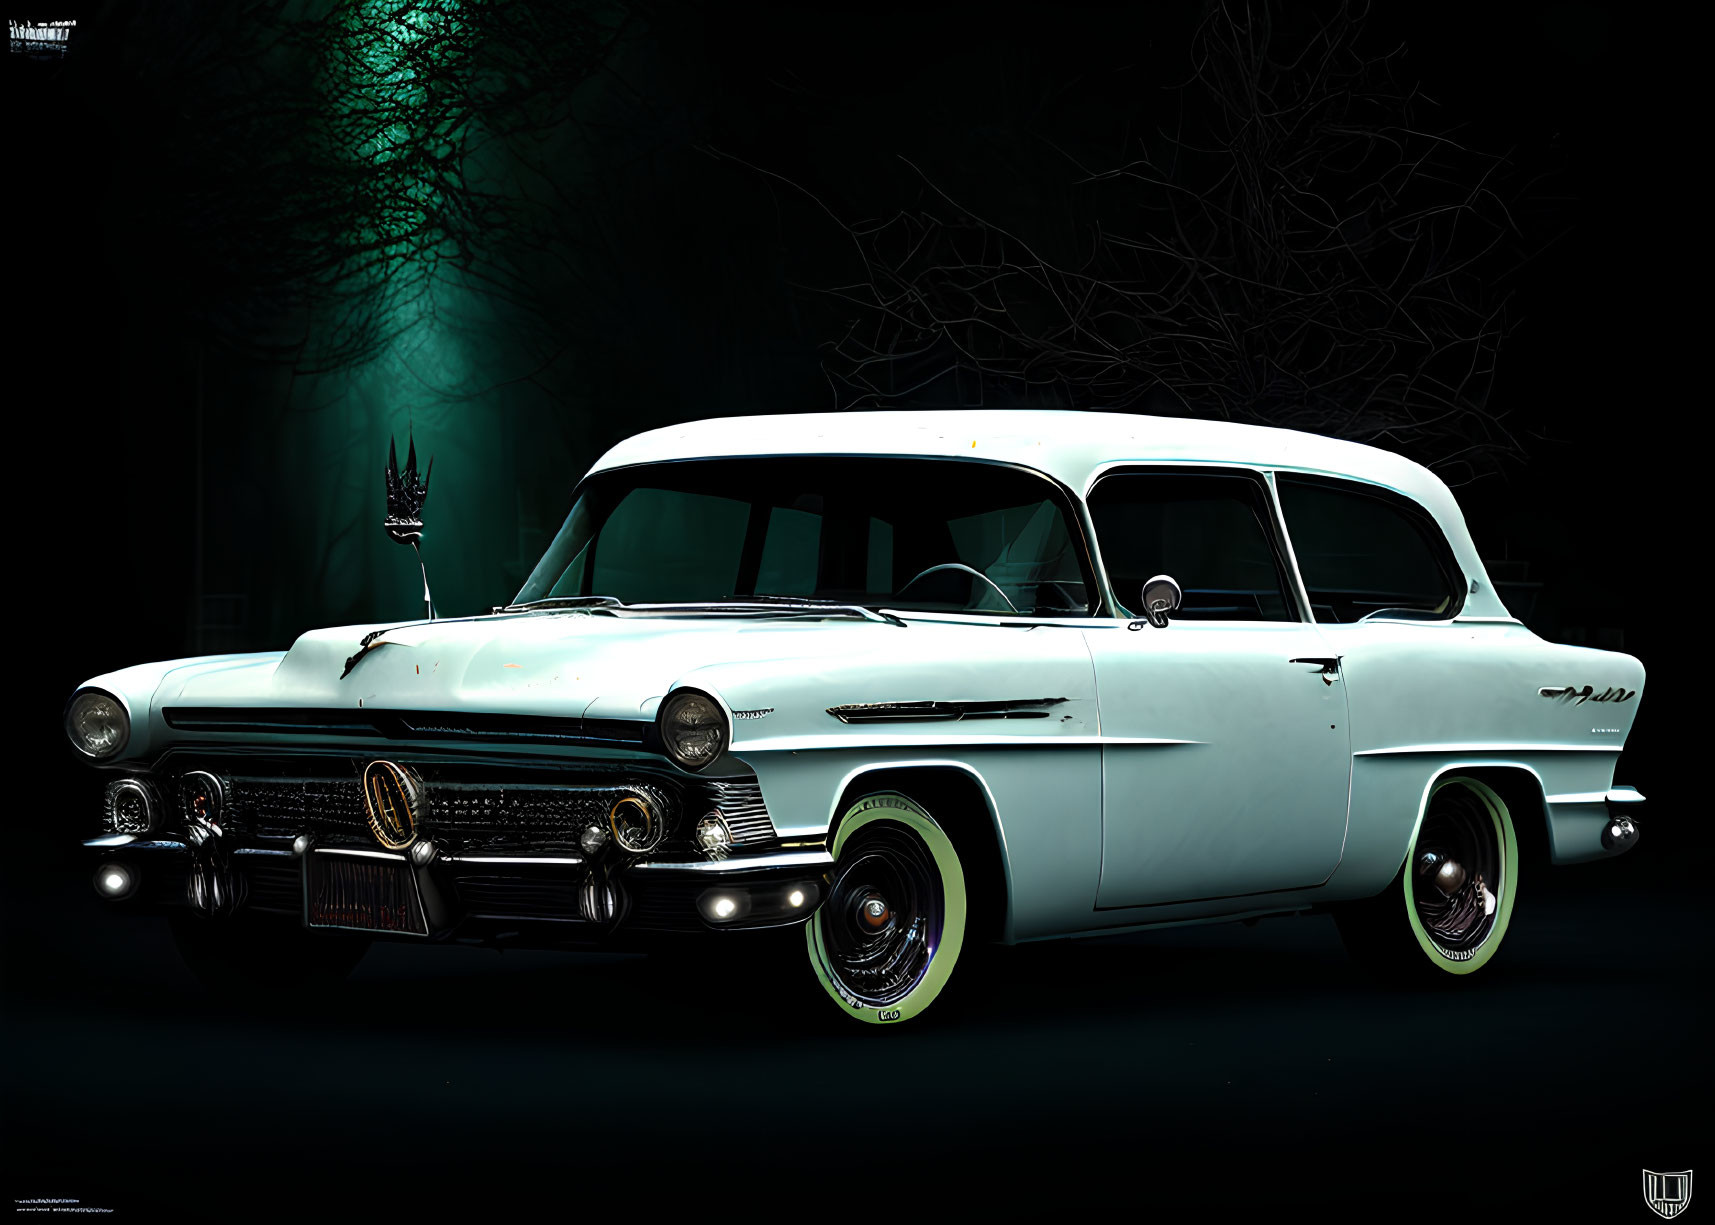 Vintage 1950s White Cadillac Sedan in Moody Green Light